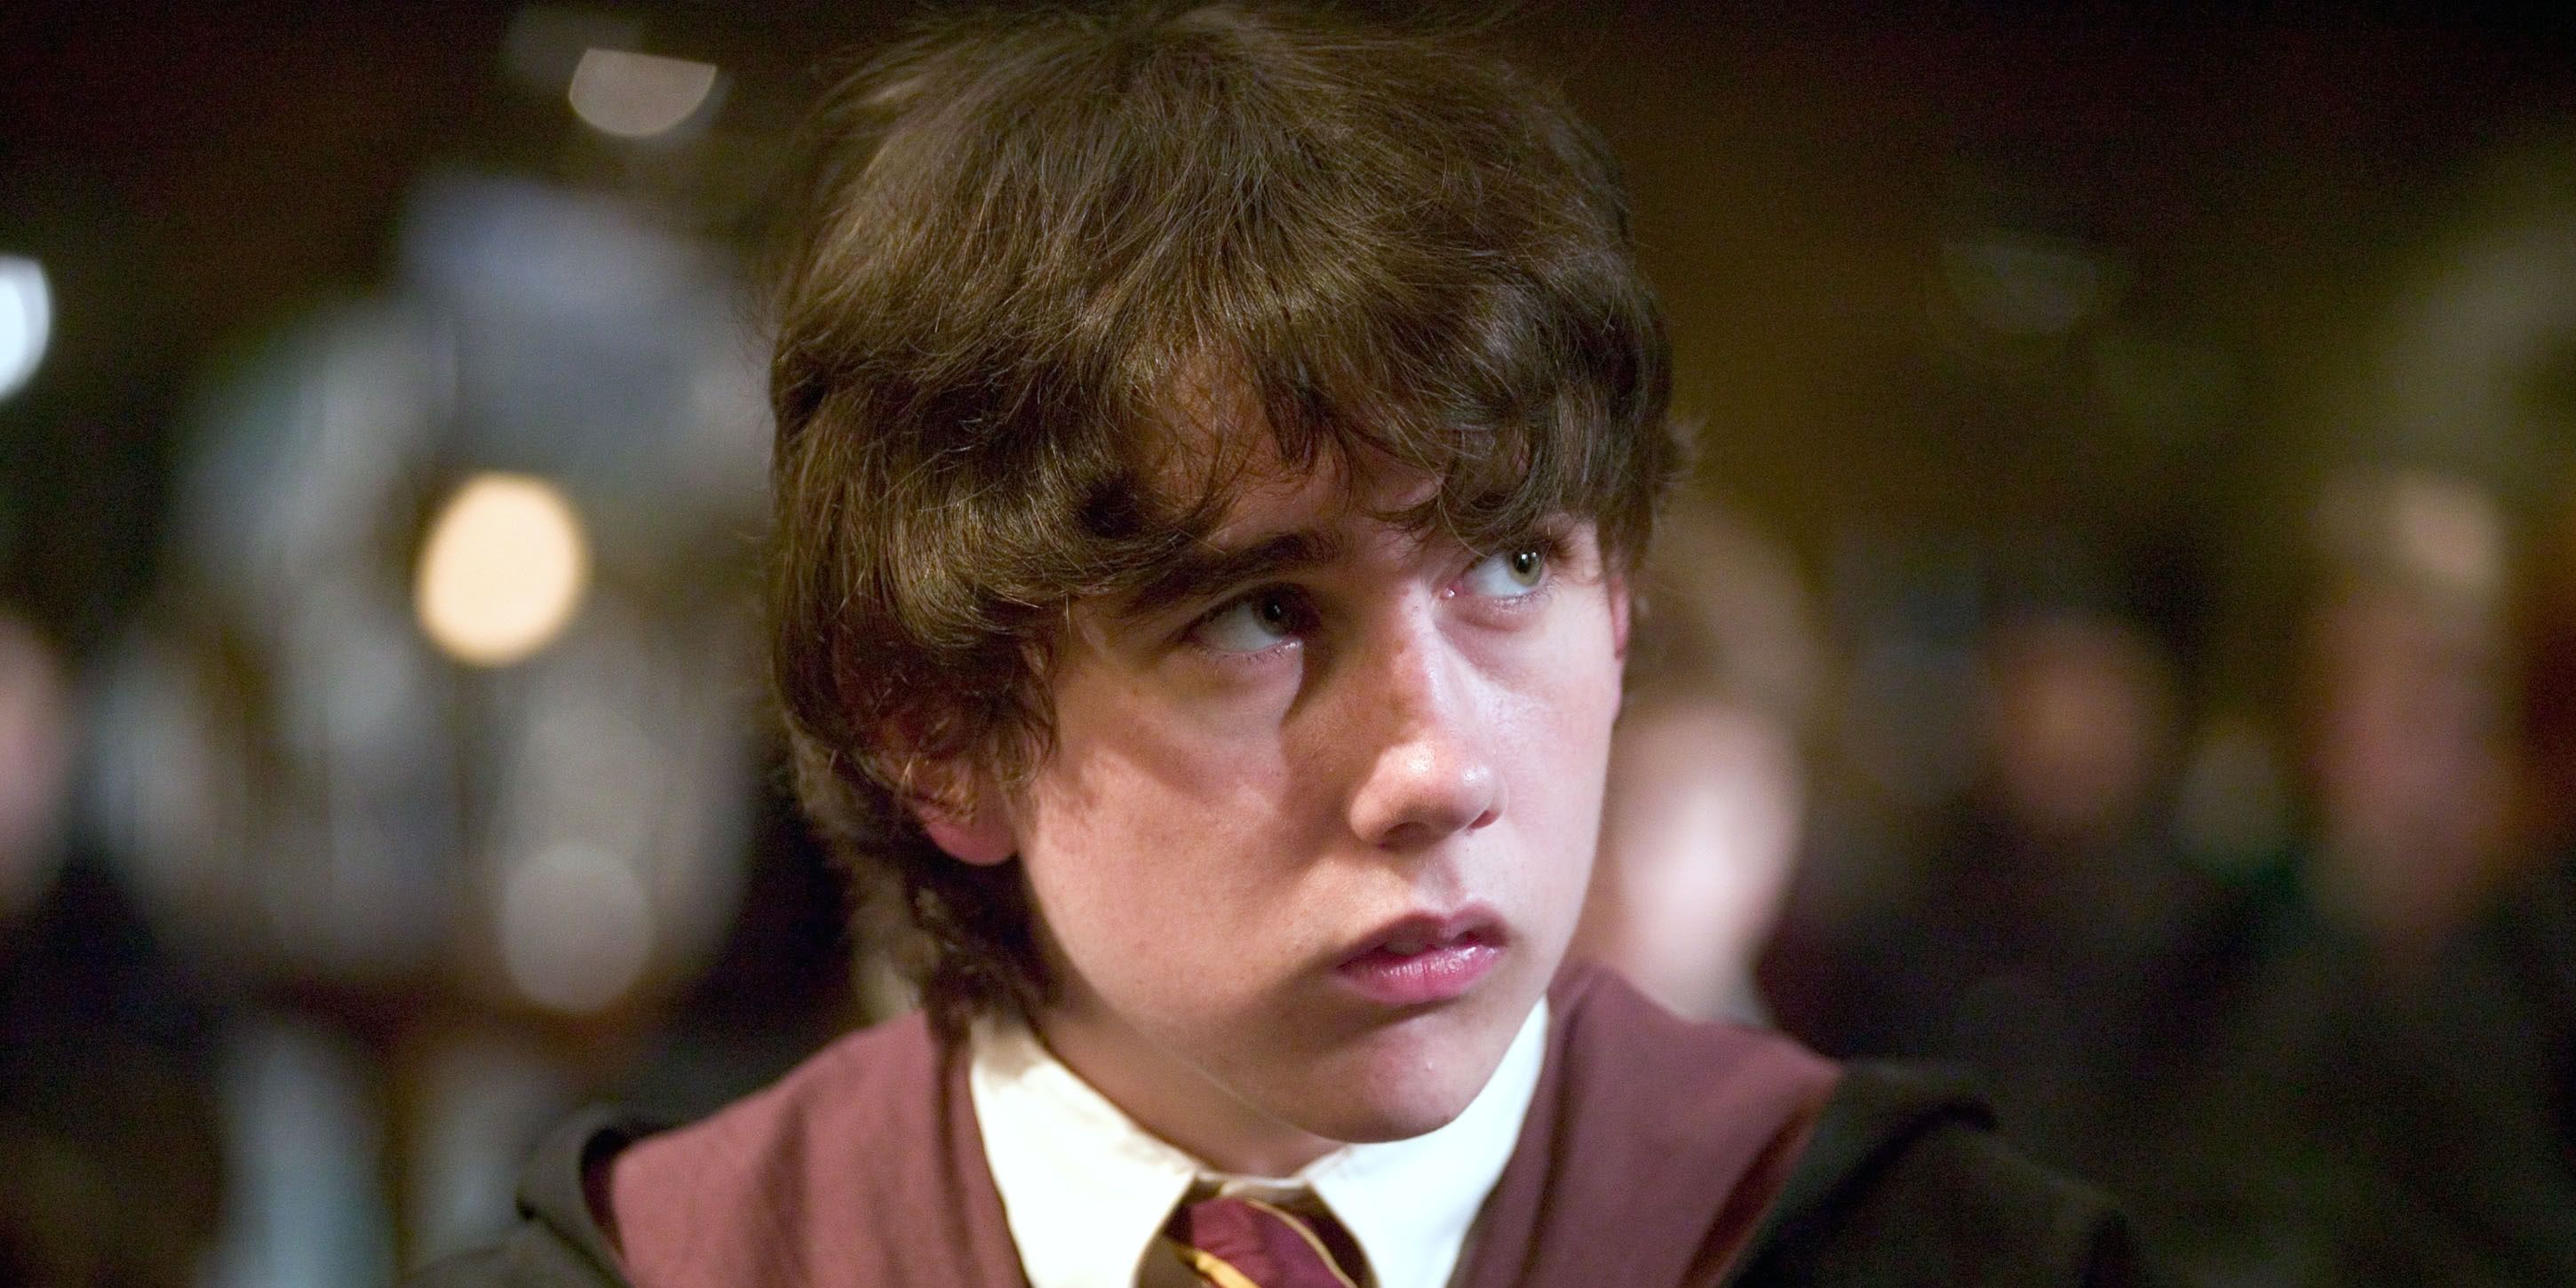 Neville Longbottom at Hogwarts